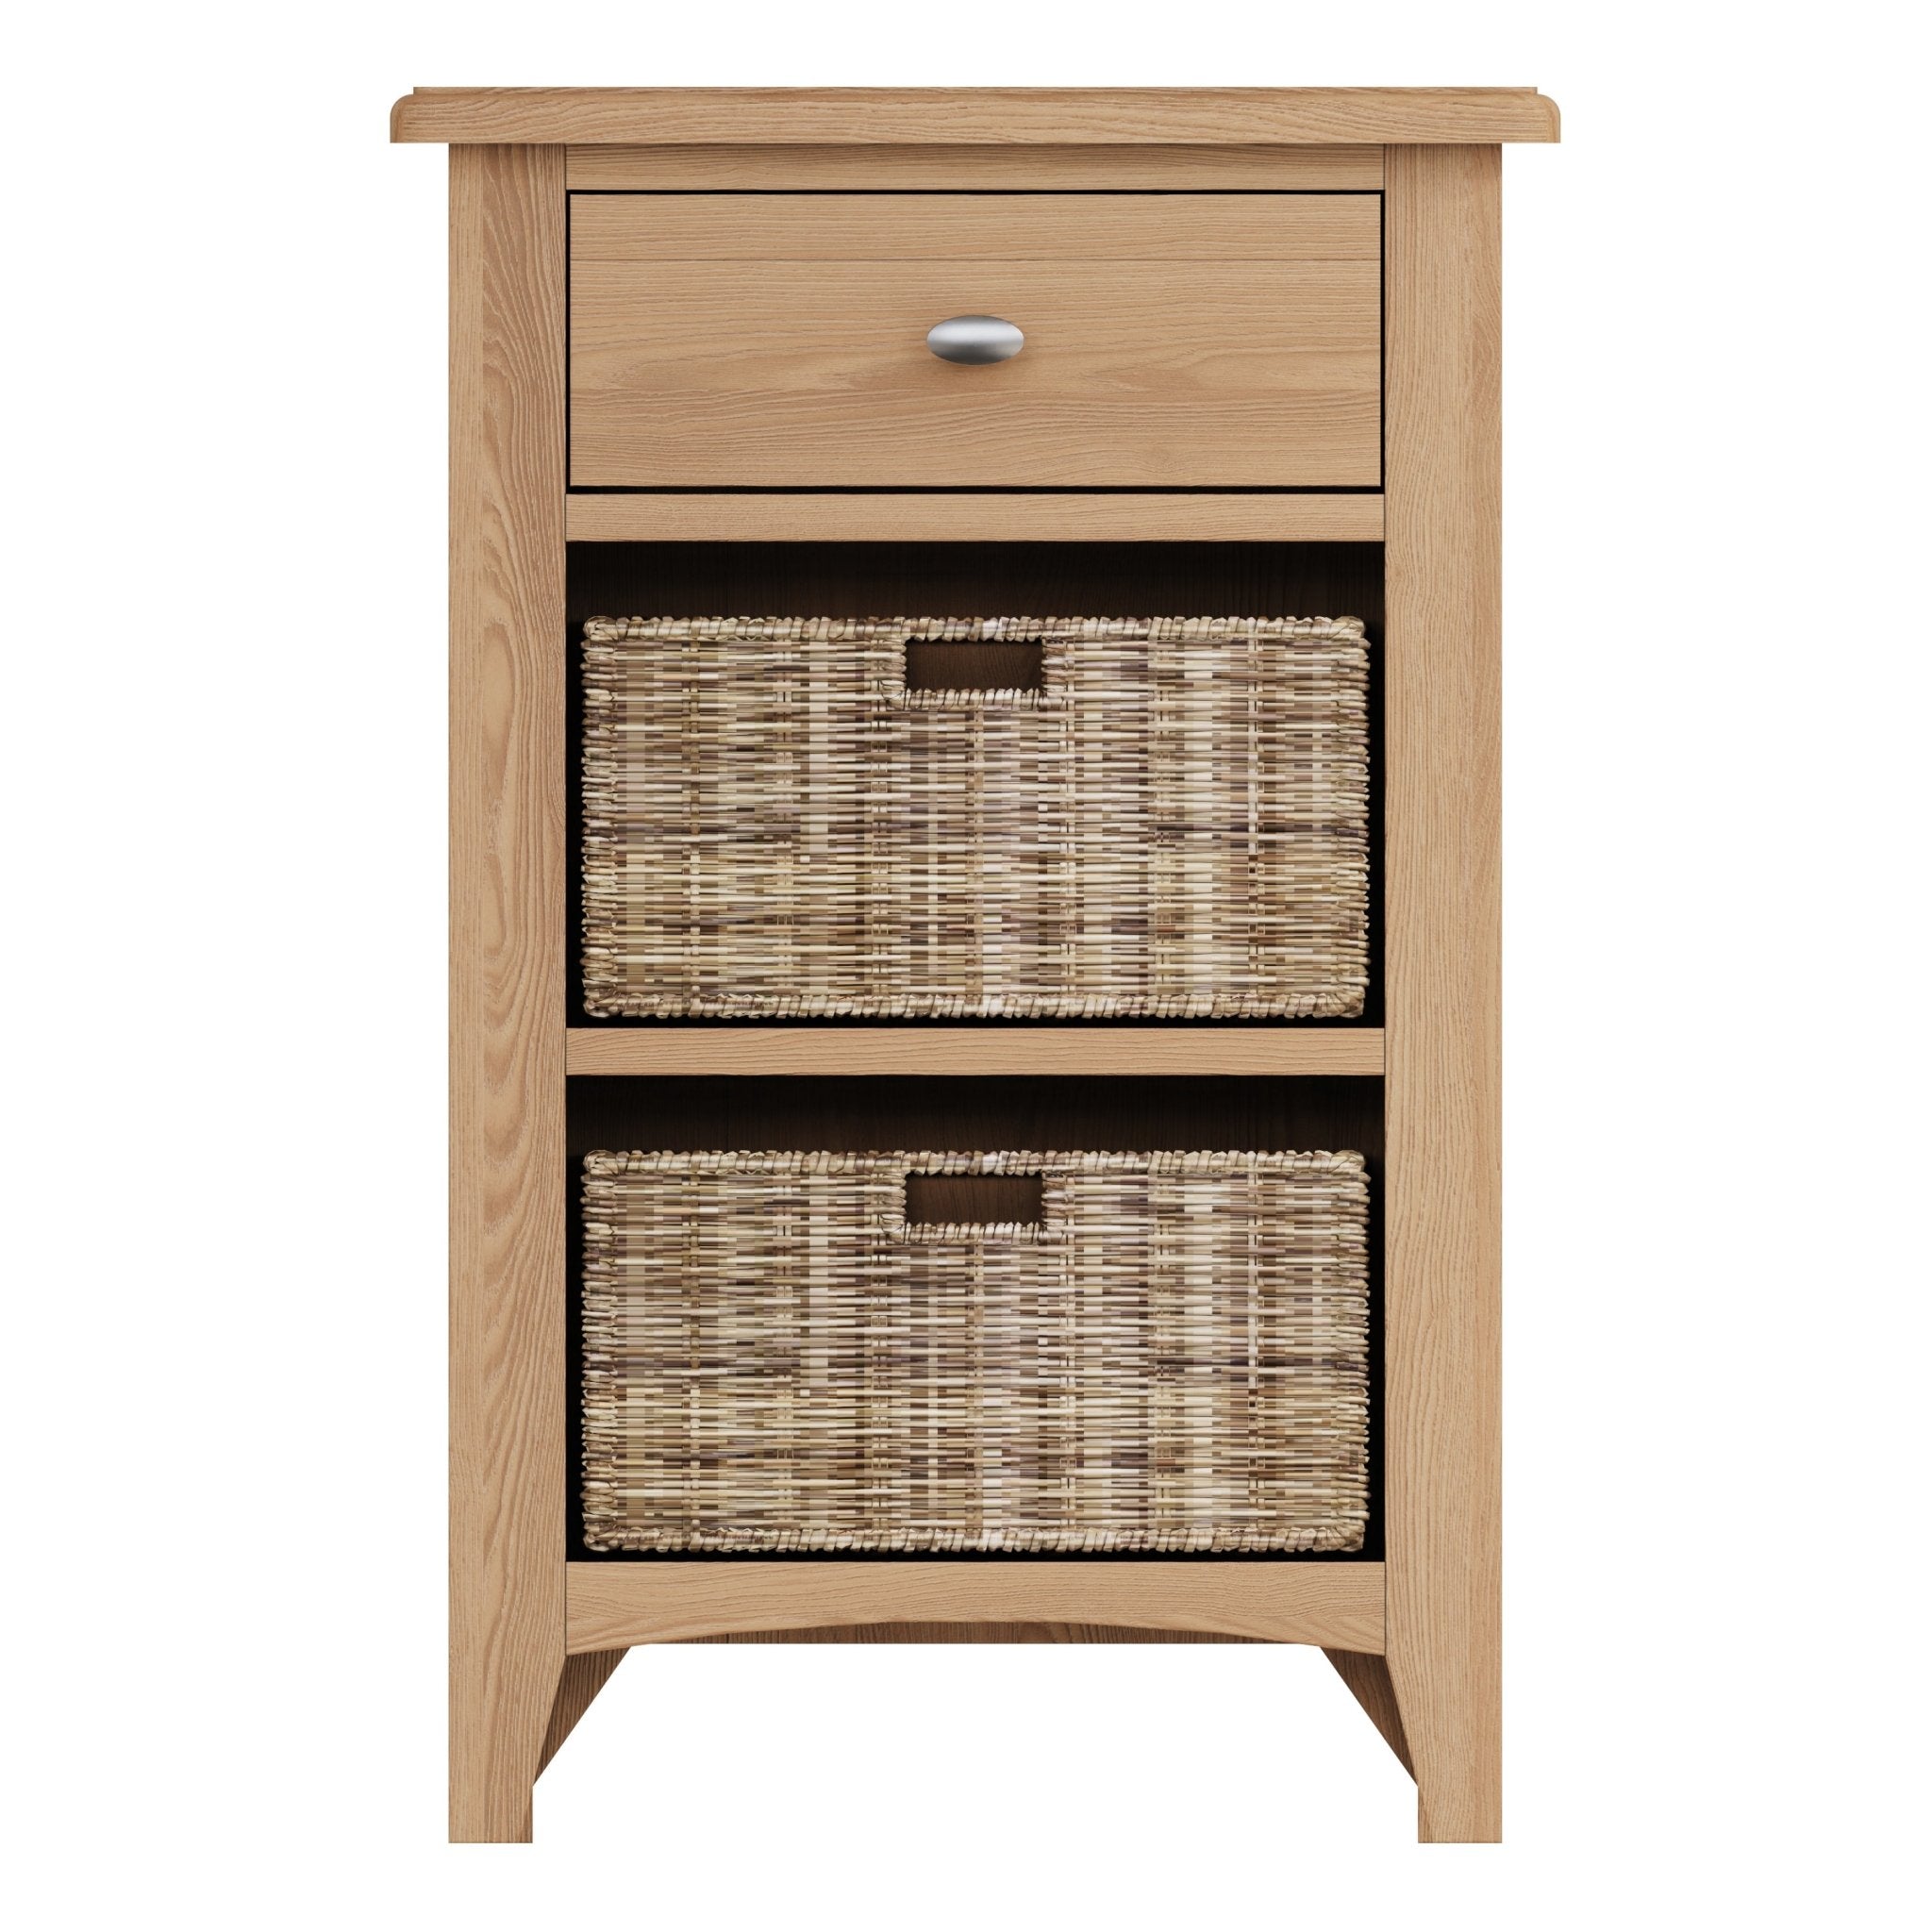 Ockley Oak 1 Drawer 2 Basket Cabinet - Duck Barn Interiors